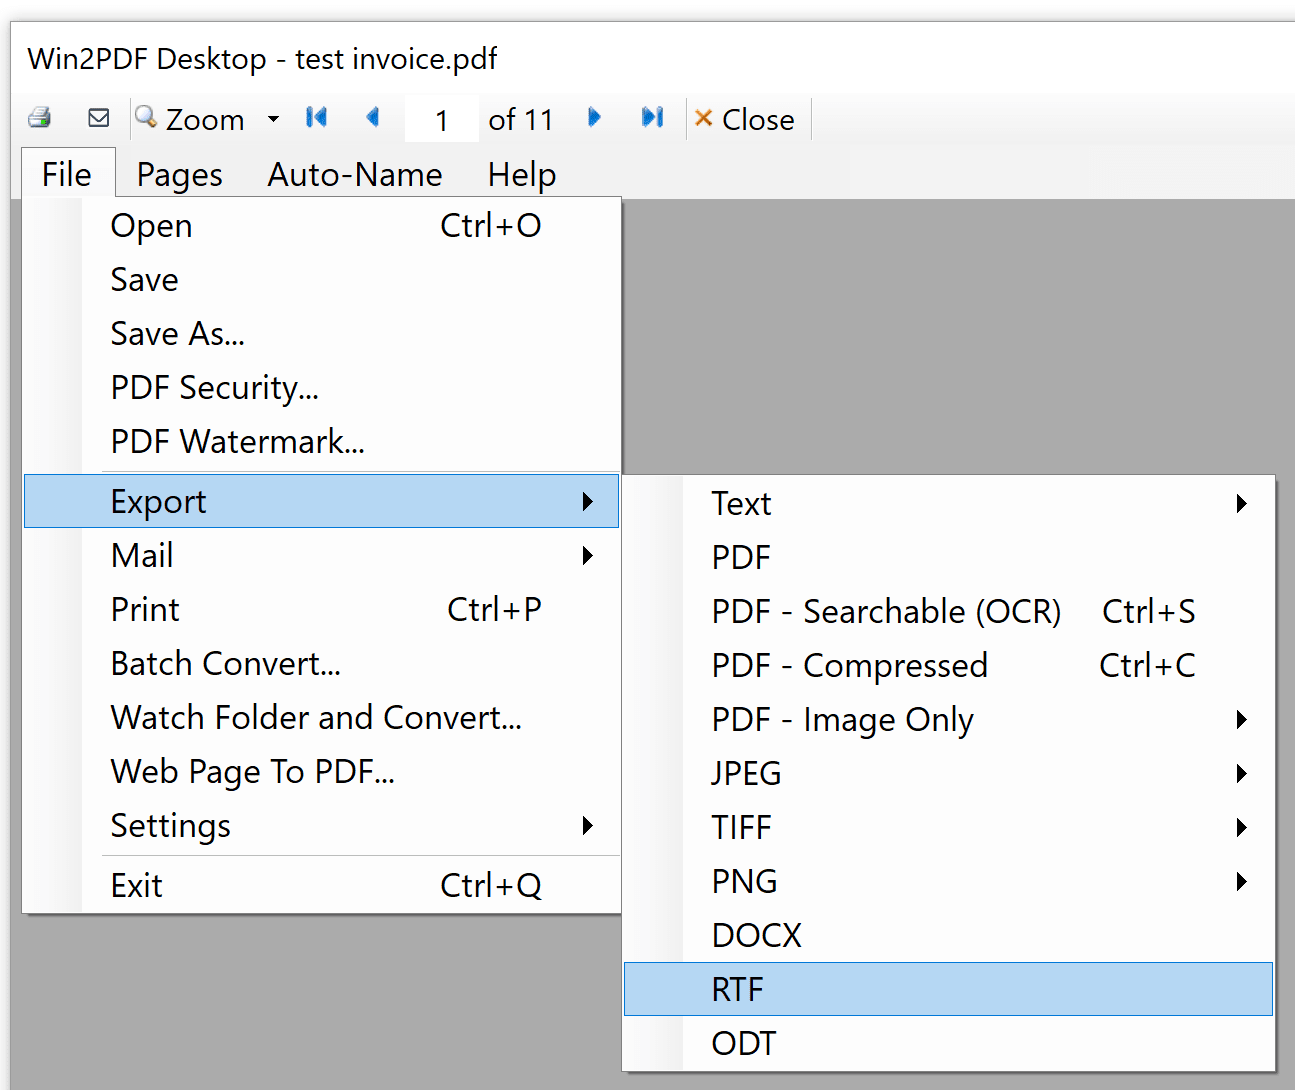 Win2PDF Desktop - Export XPS to RTF